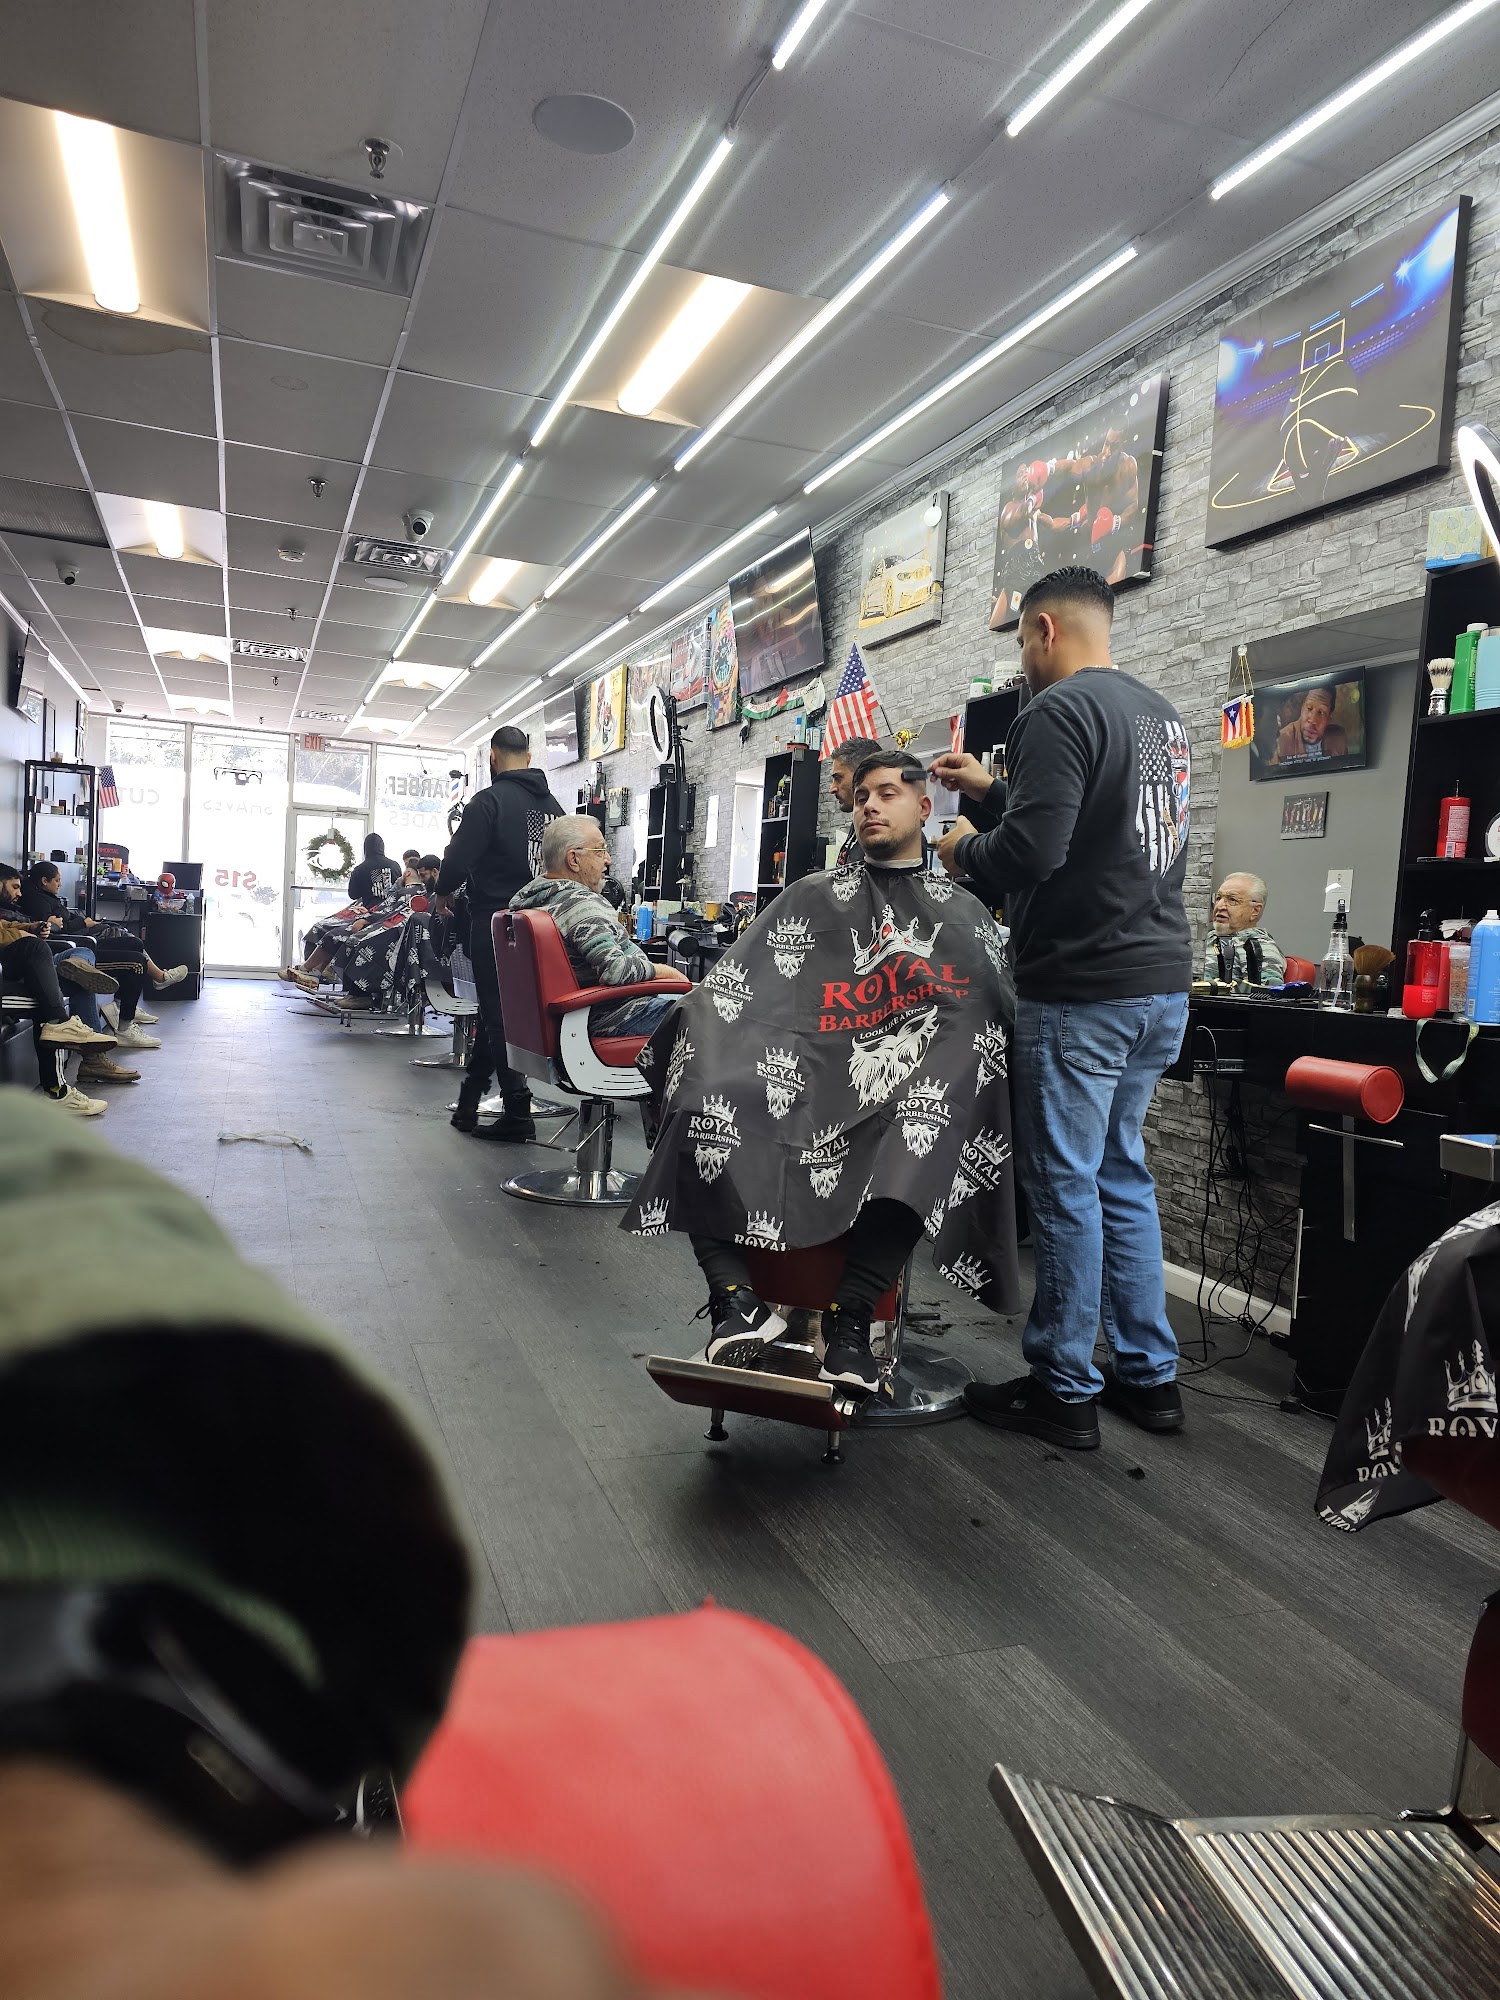 Royal BarberShop — RARITAN 3 US-206, Raritan New Jersey 08869